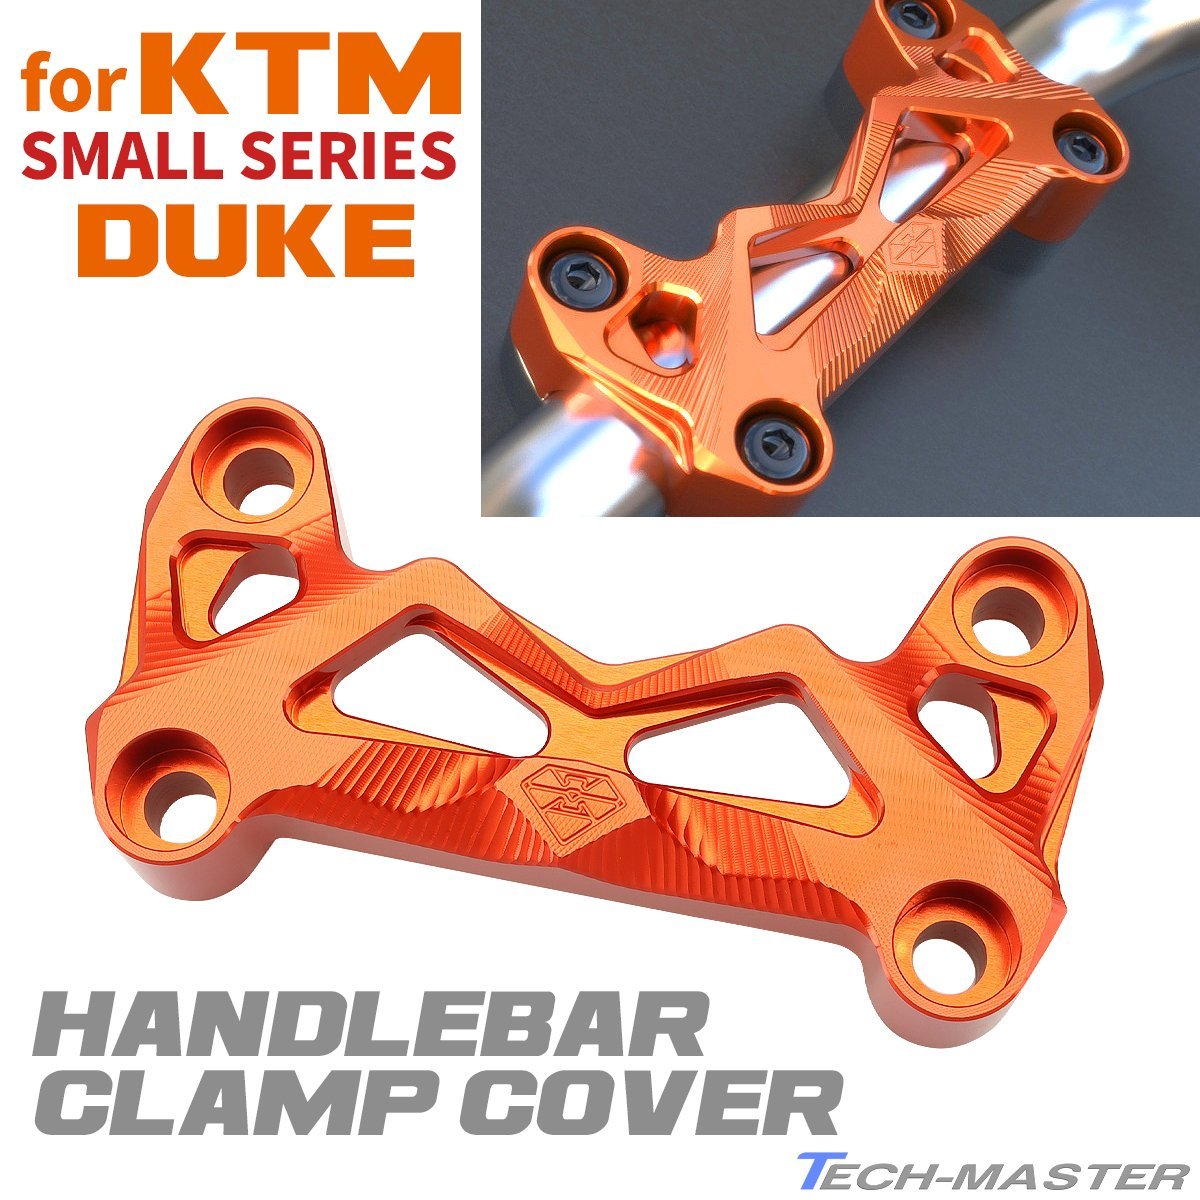 KTM DUKE ハンドルバー クランプカバー スモールシリーズ専用 全年式対応 T6アルミ オレンジ SZ494-O_画像1